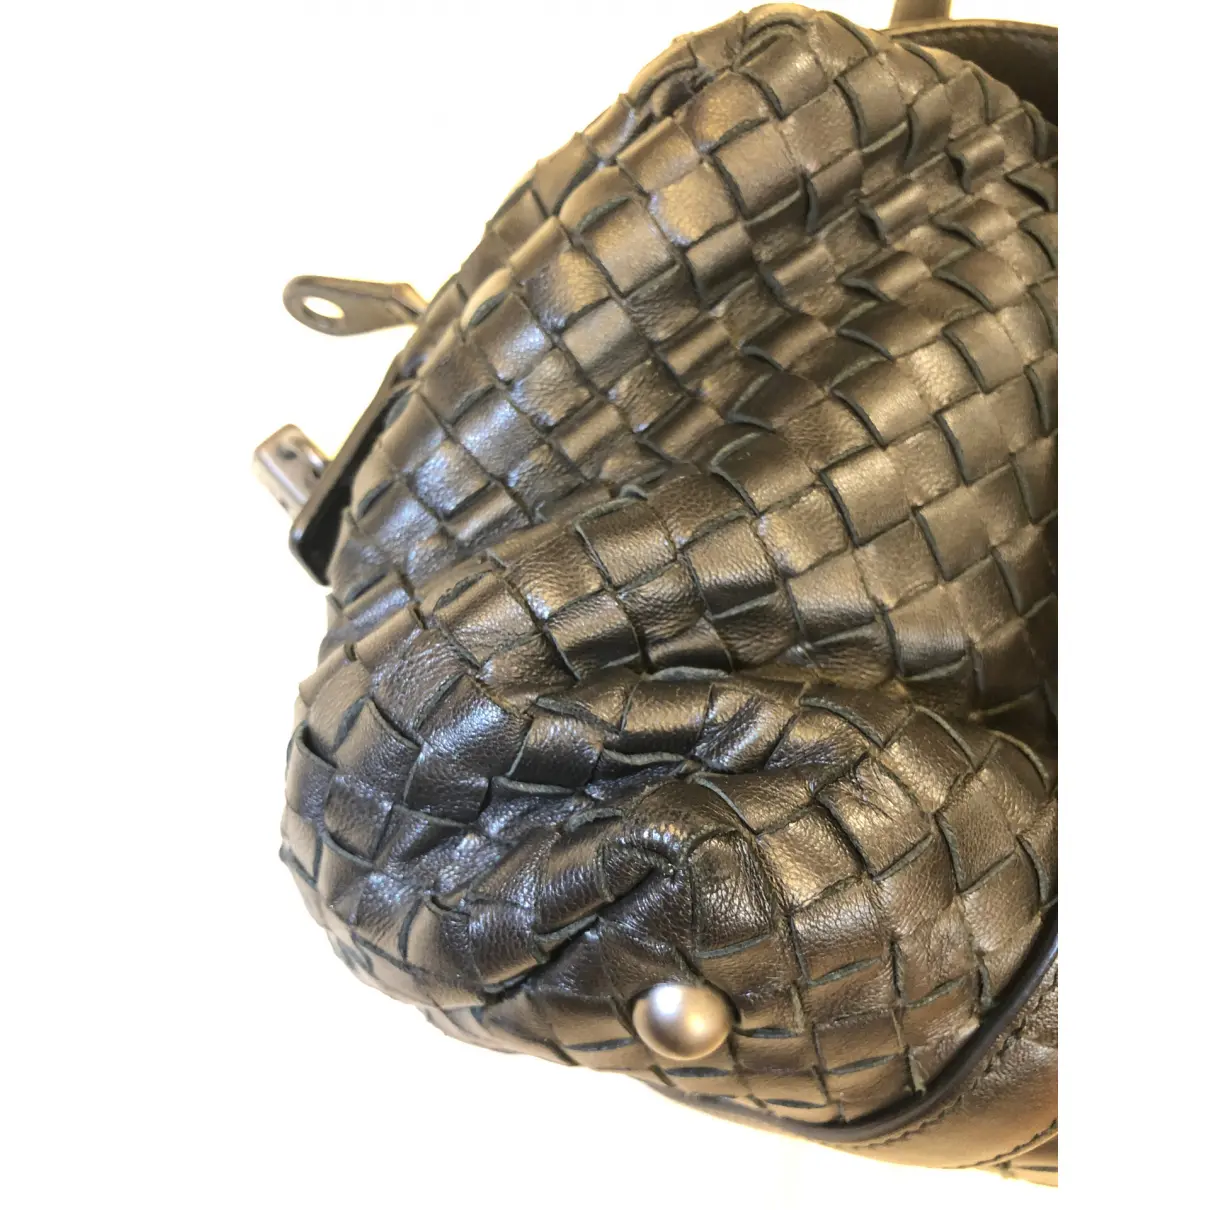 Montaigne leather handbag Bottega Veneta